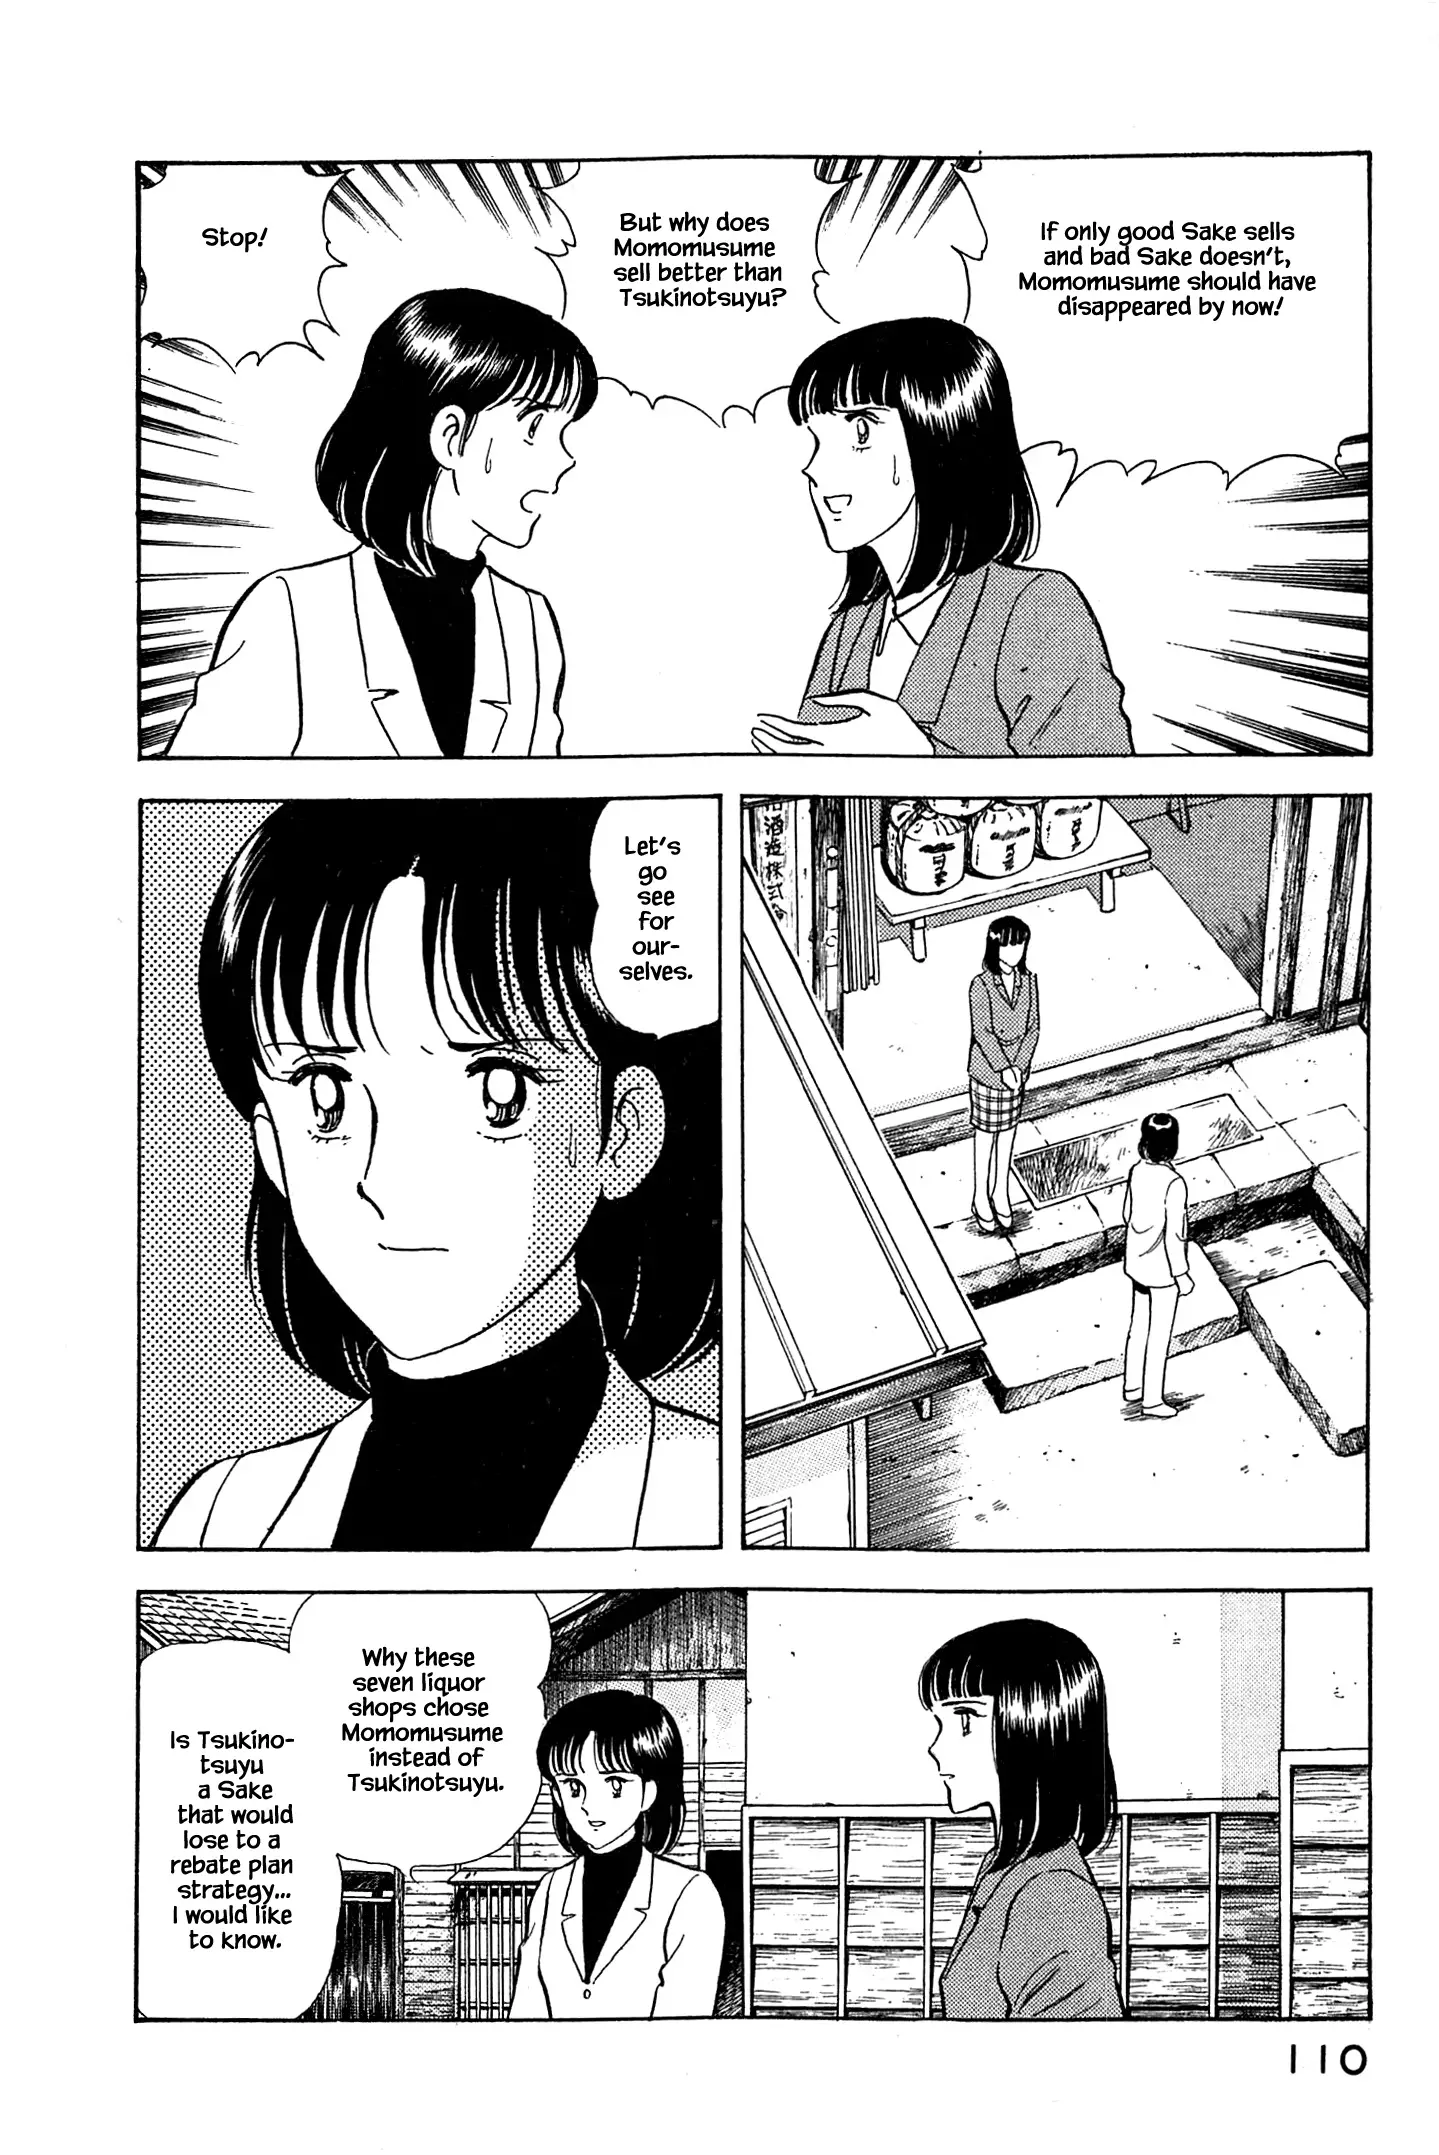 Natsuko's Sake - 49 page 10-003c3506